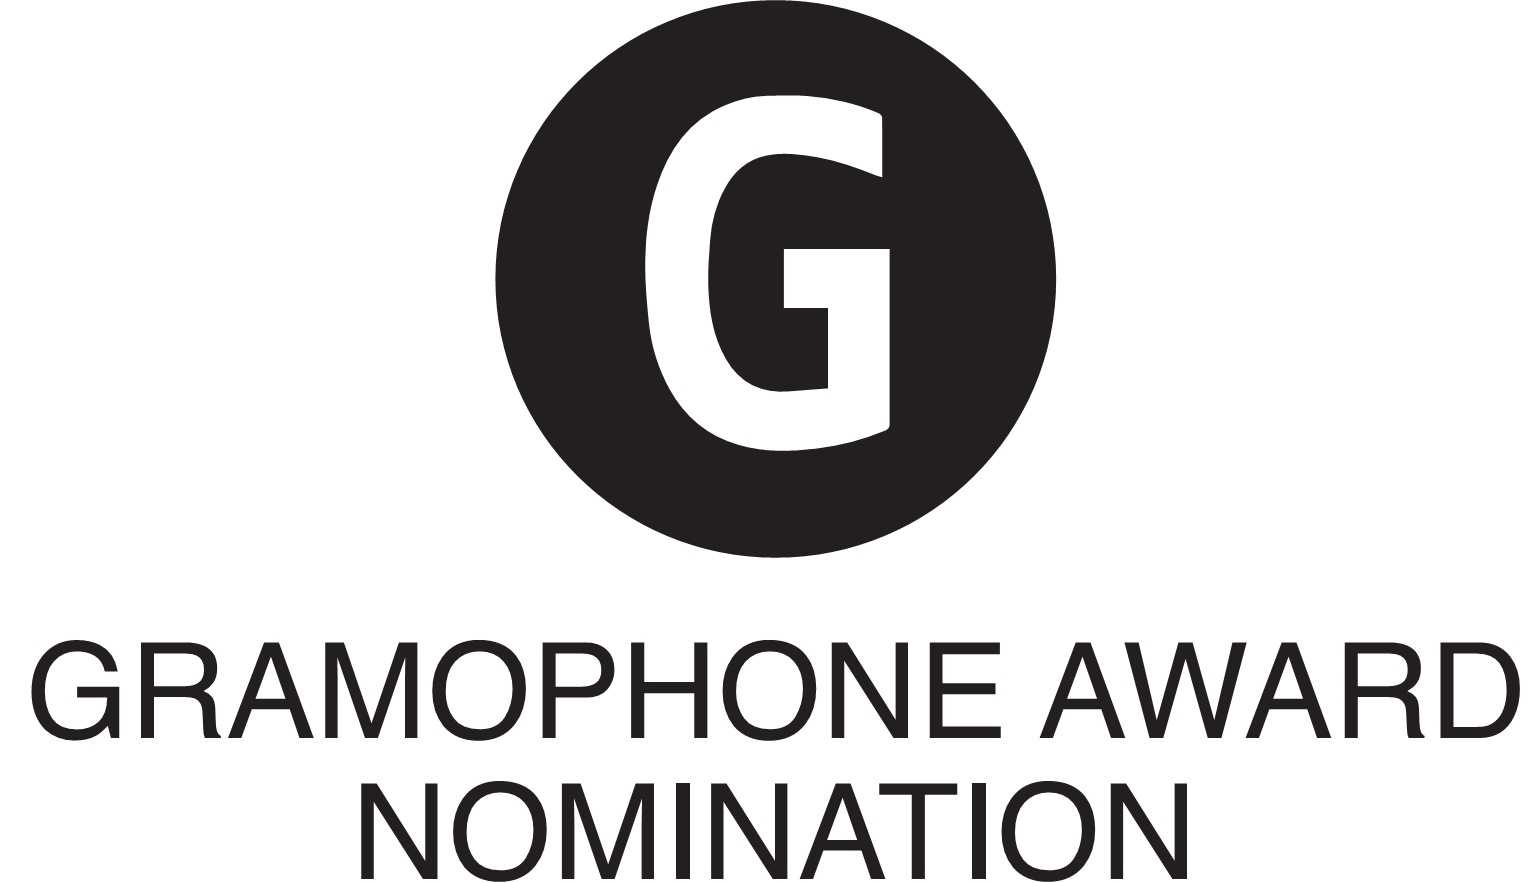 Gramophone Award: 'Nomination' (2017)